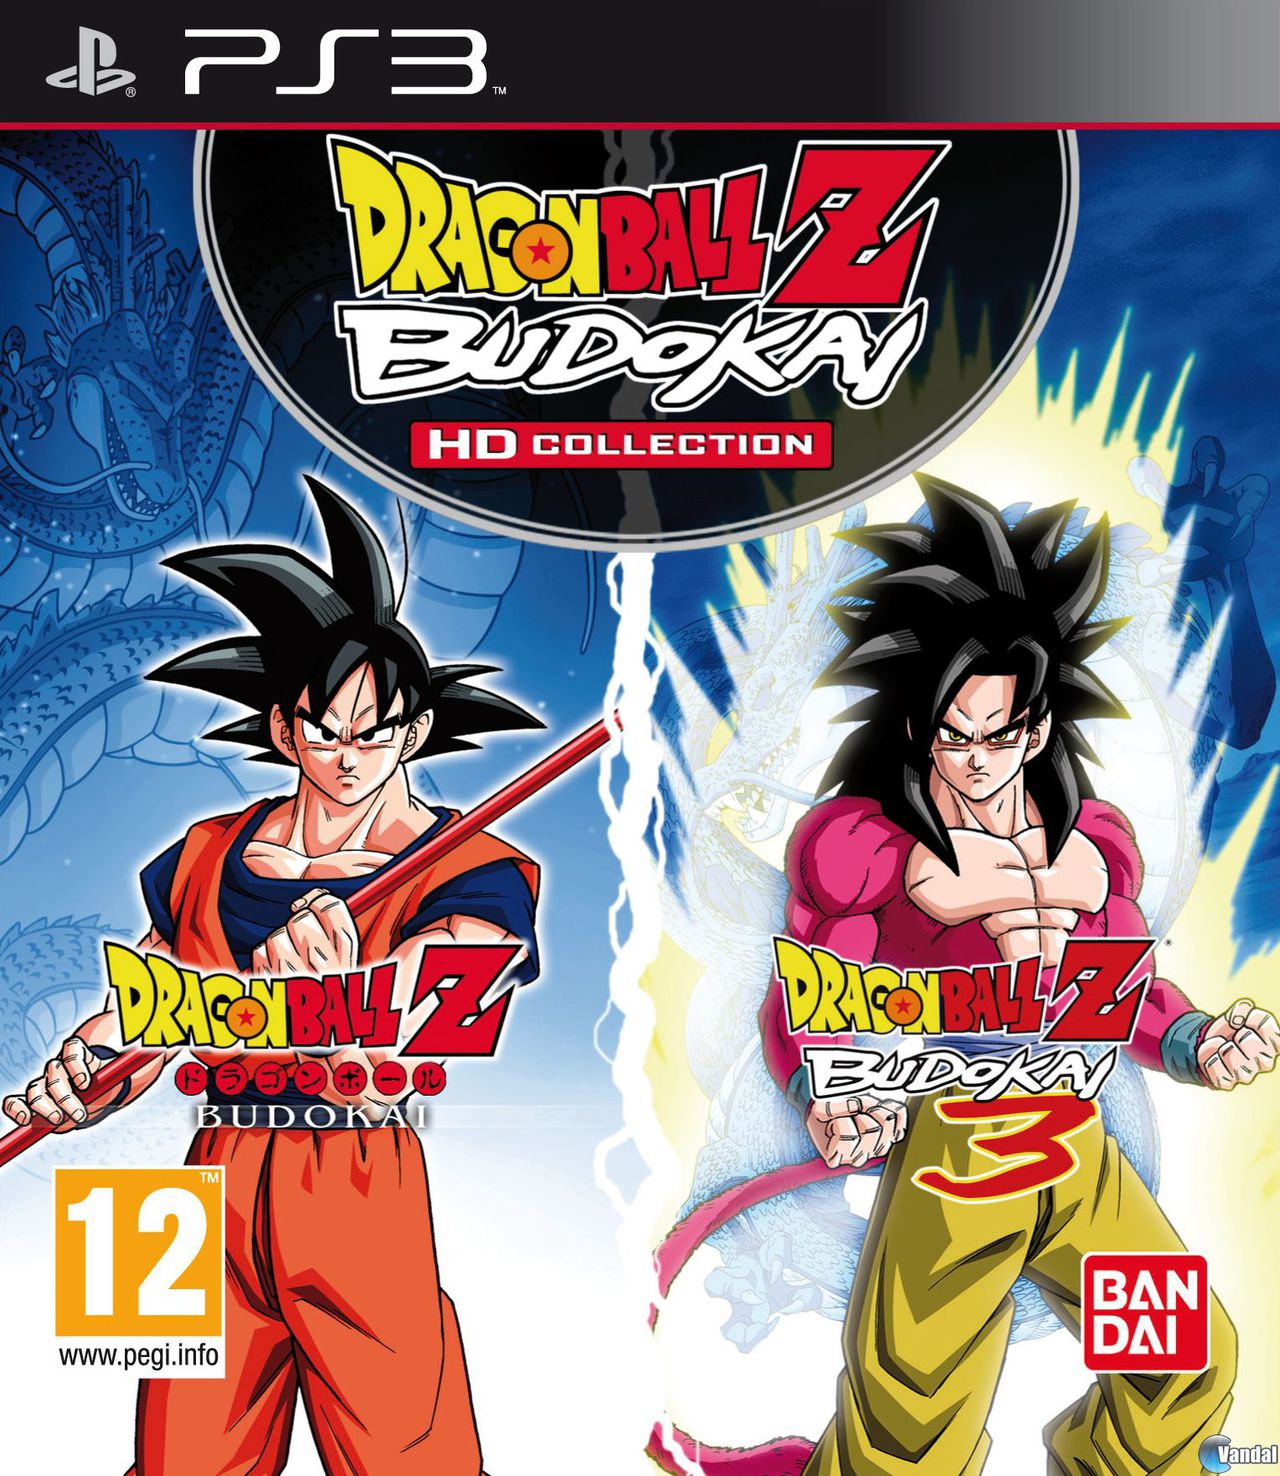 Sin personal Marcado ayer Dragon Ball Z Budokai HD Collection - Videojuego (PS3 y Xbox 360) - Vandal